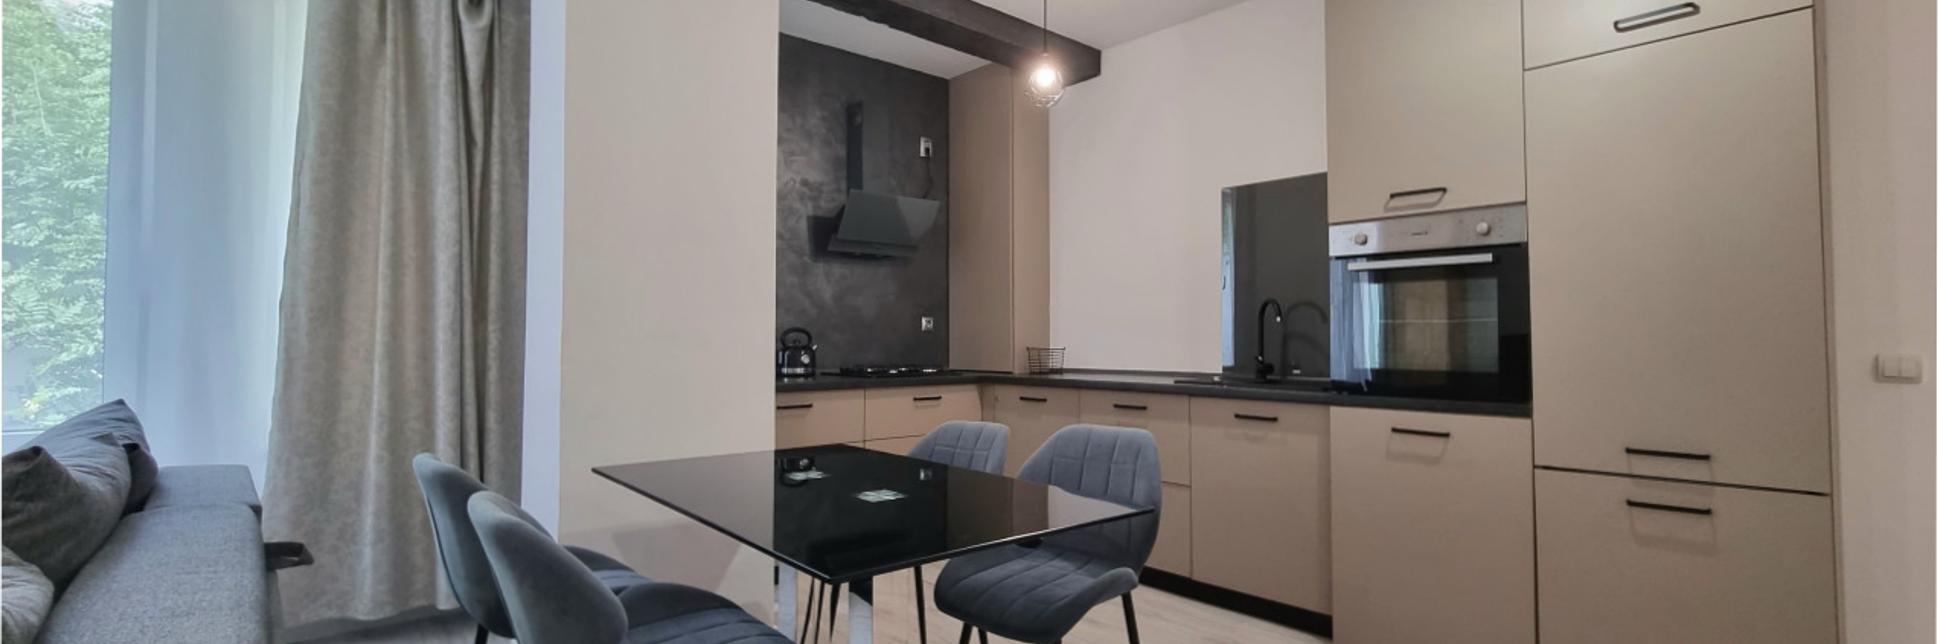 Finished and furnished turnkey apartment, Calea Turzii area